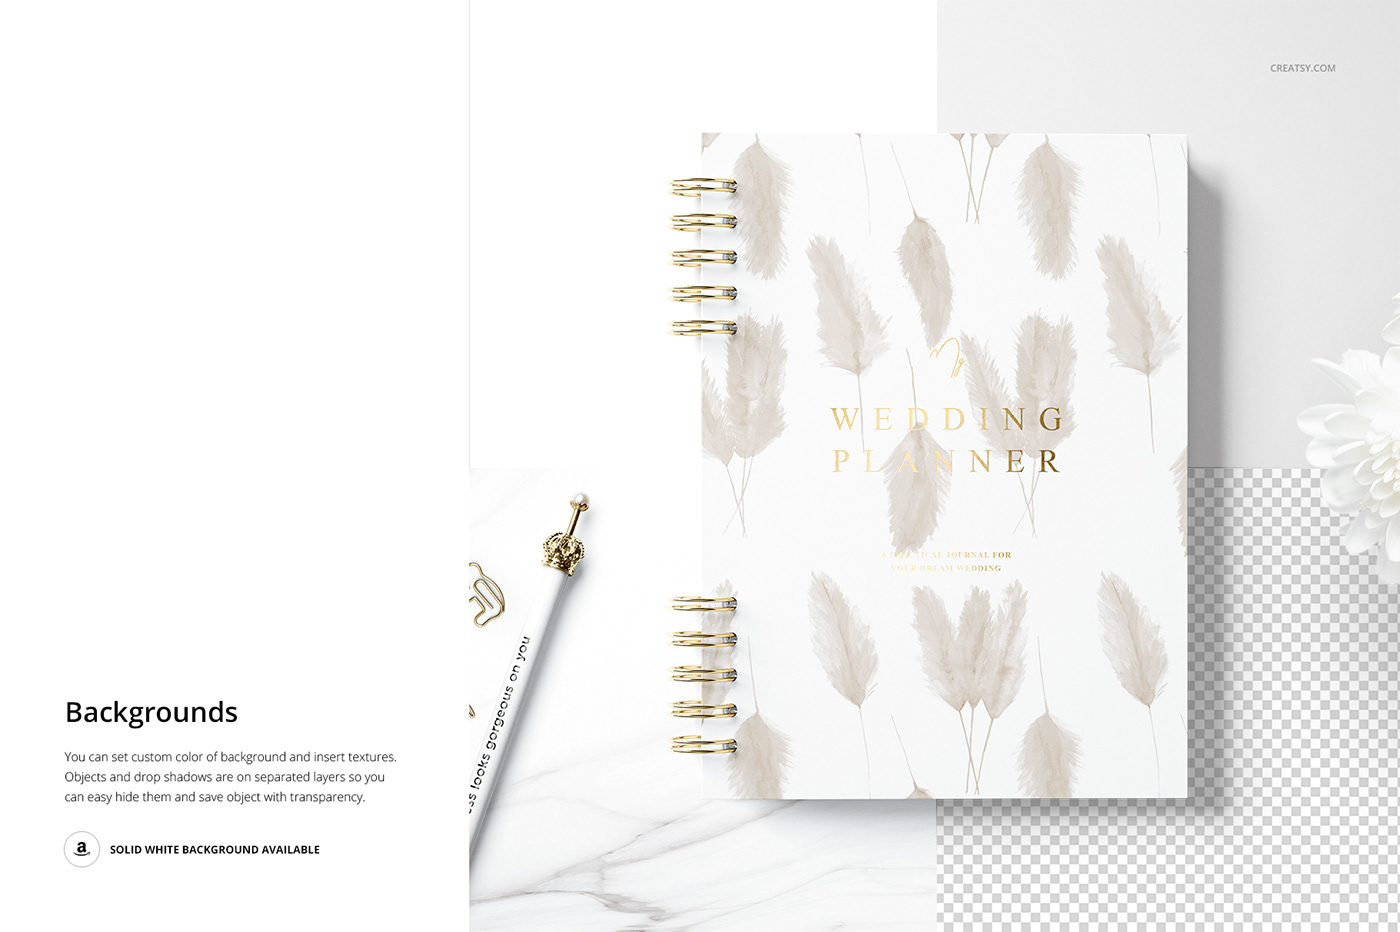 Binder cover creatsy hard mock-up Mockup notebook planner template wedding